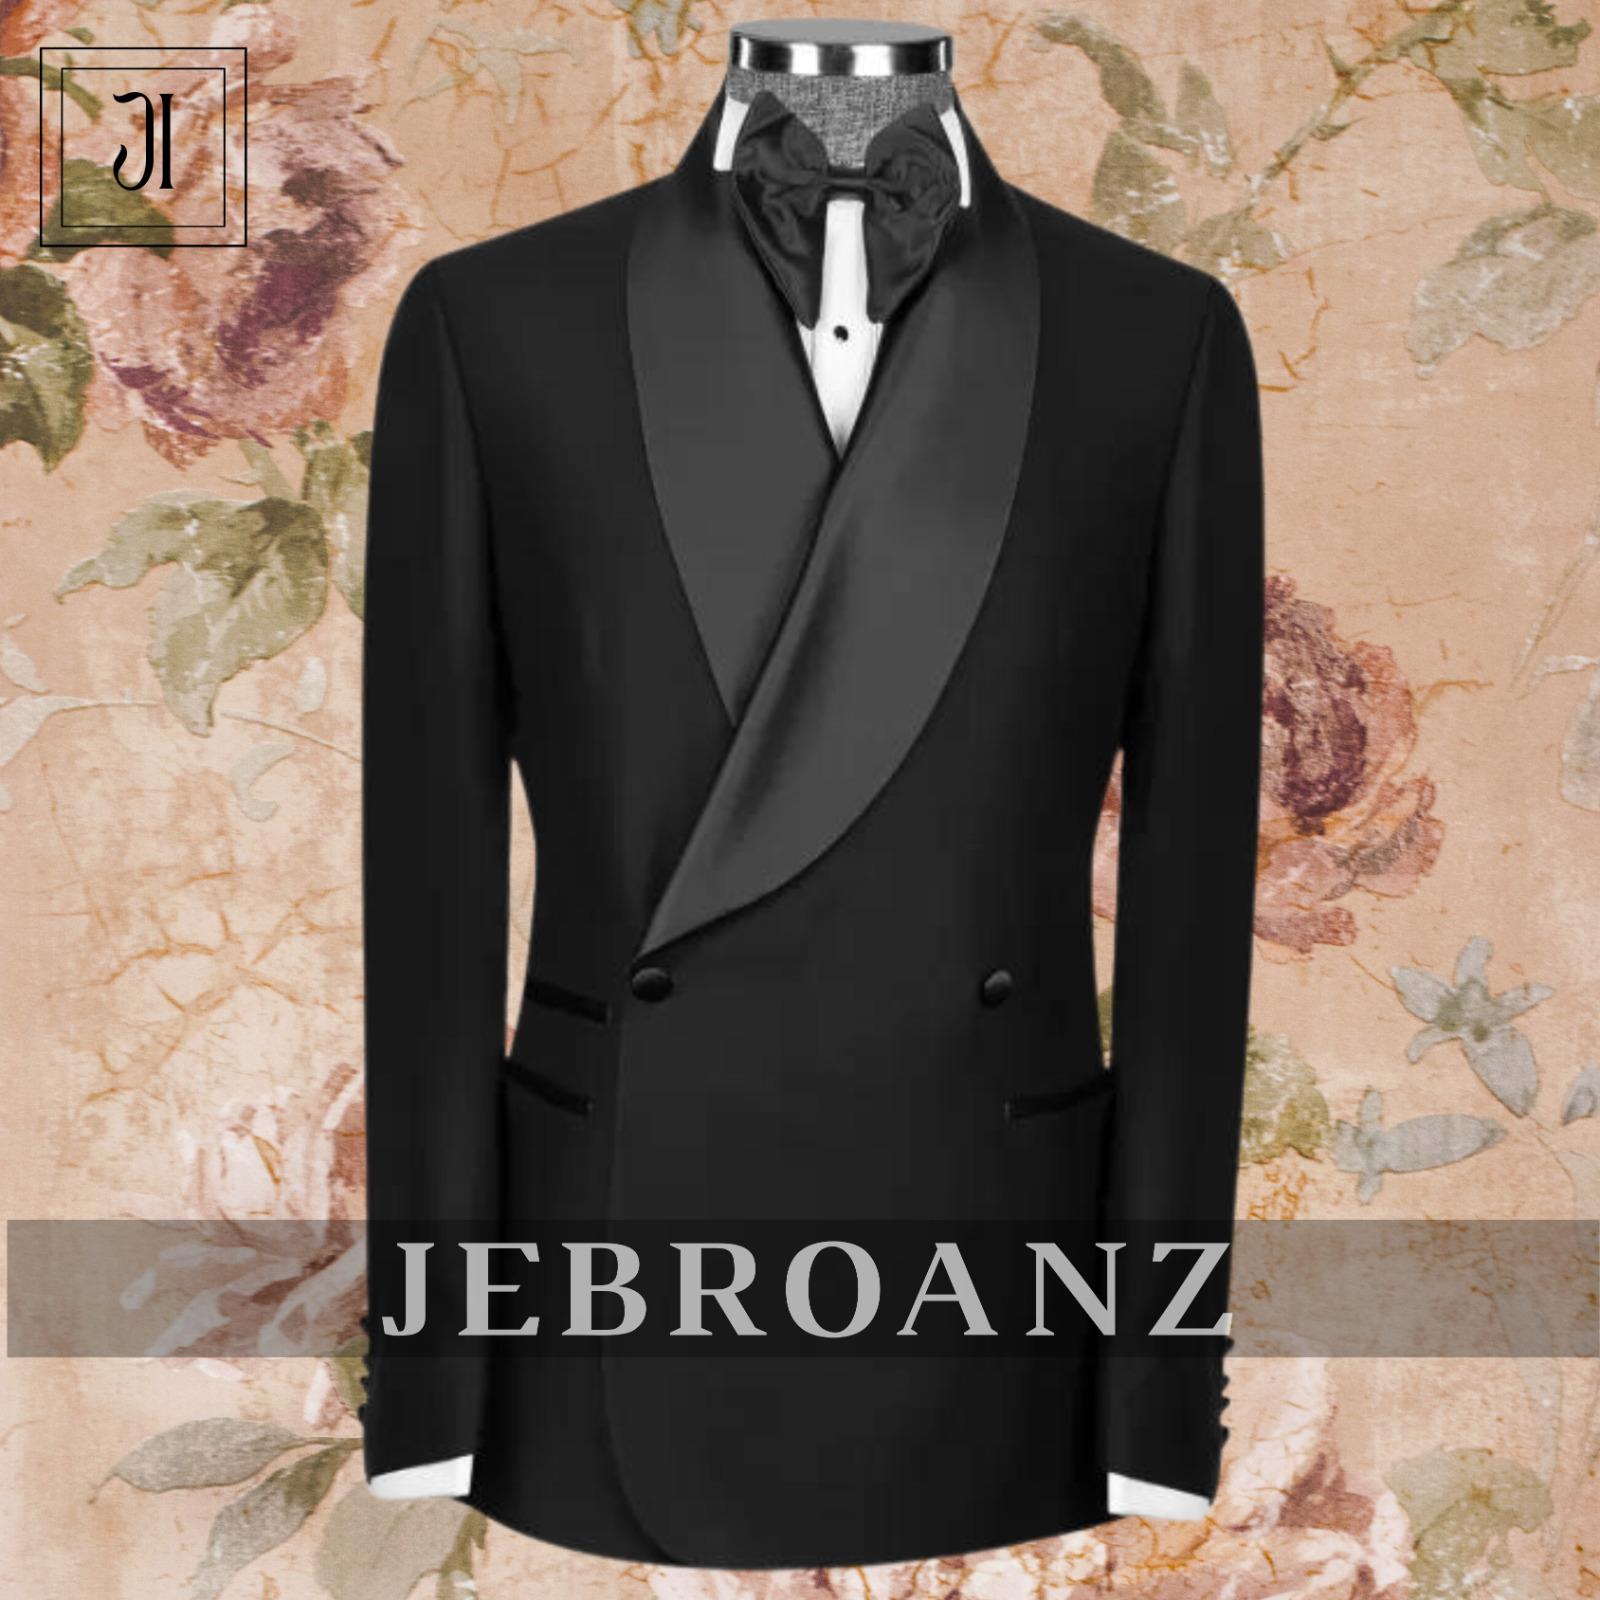 New Classy Double Breasted Black Tuxedo-Suit For men ,3 piece Suit,  Formal Suit